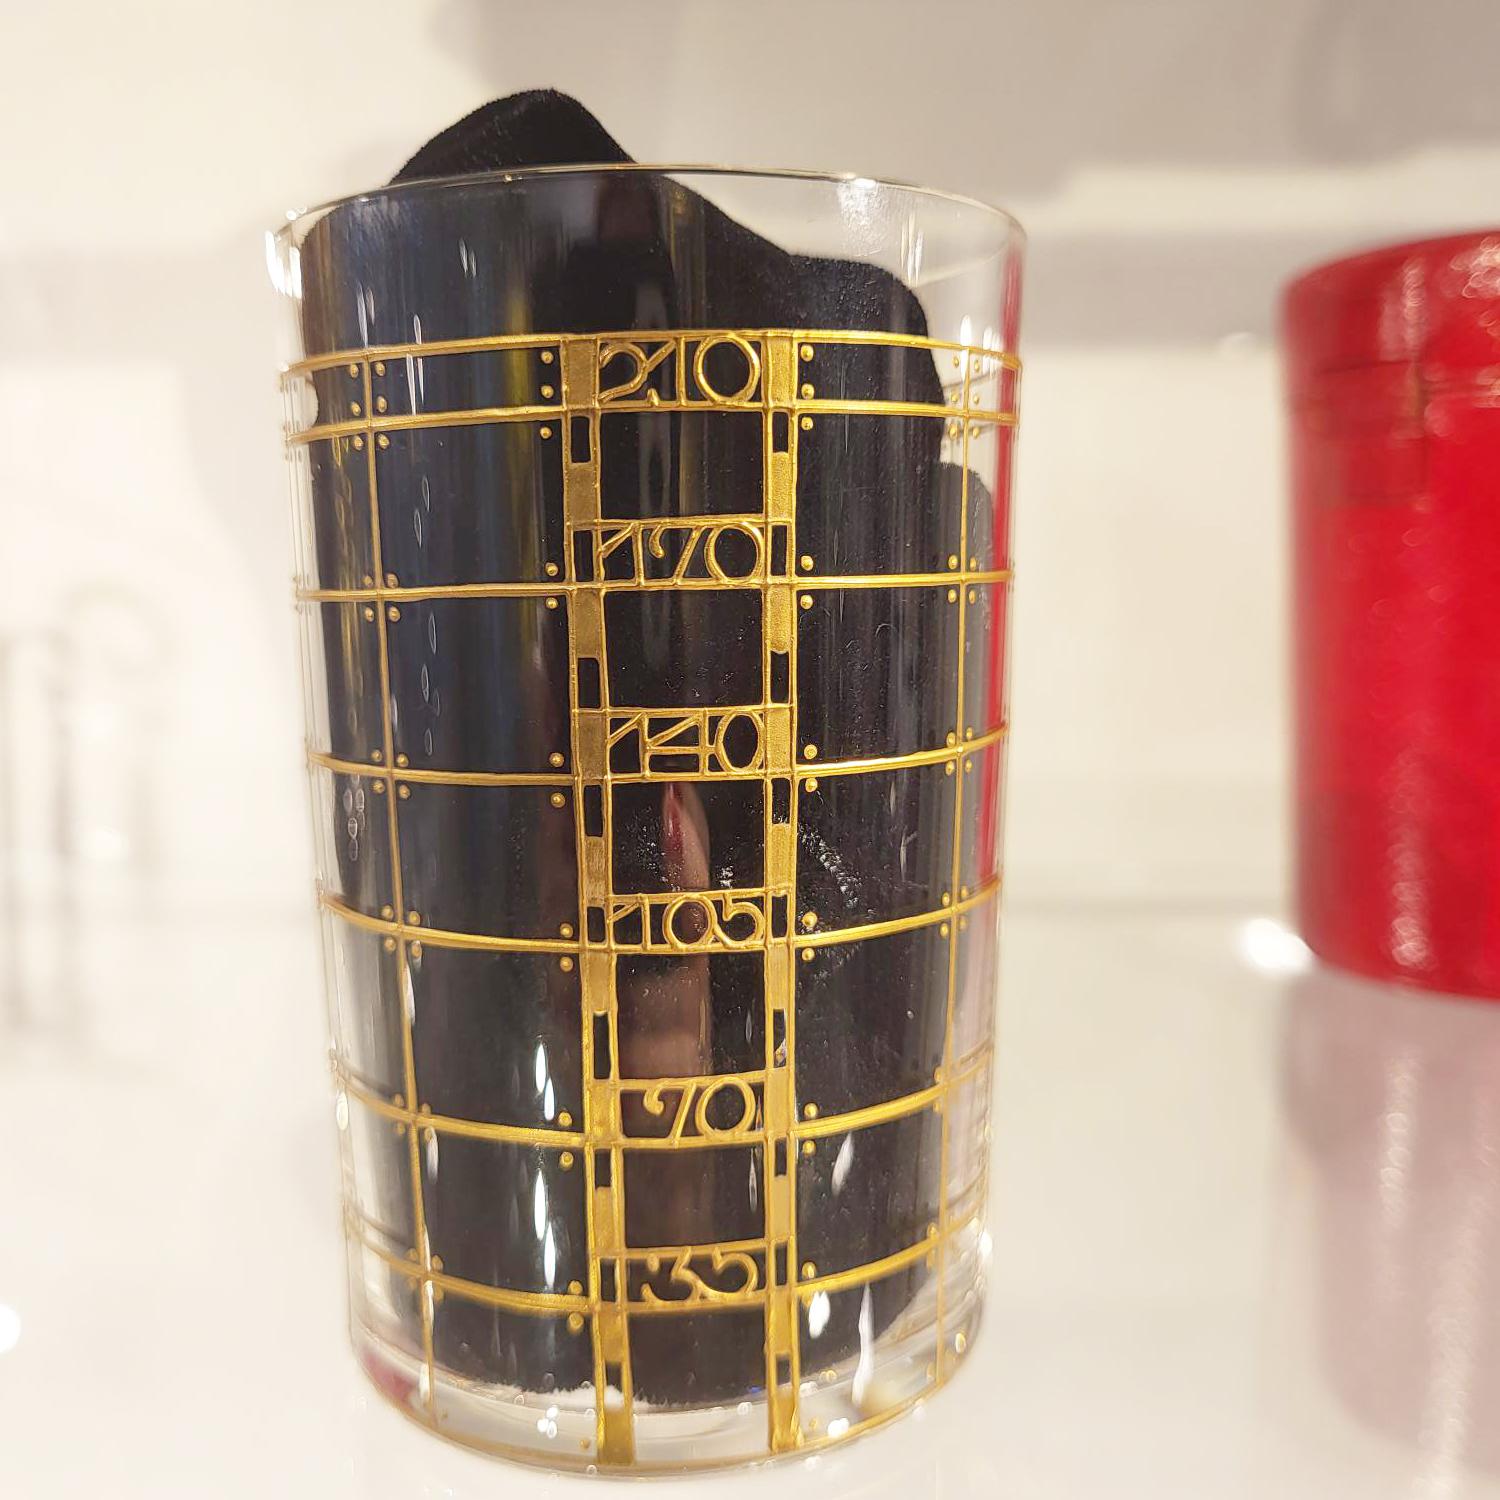 Early 20th Century Art Nouveau Glass Measuring Cup with Case by Wiener Werkstätte Vienna Austria